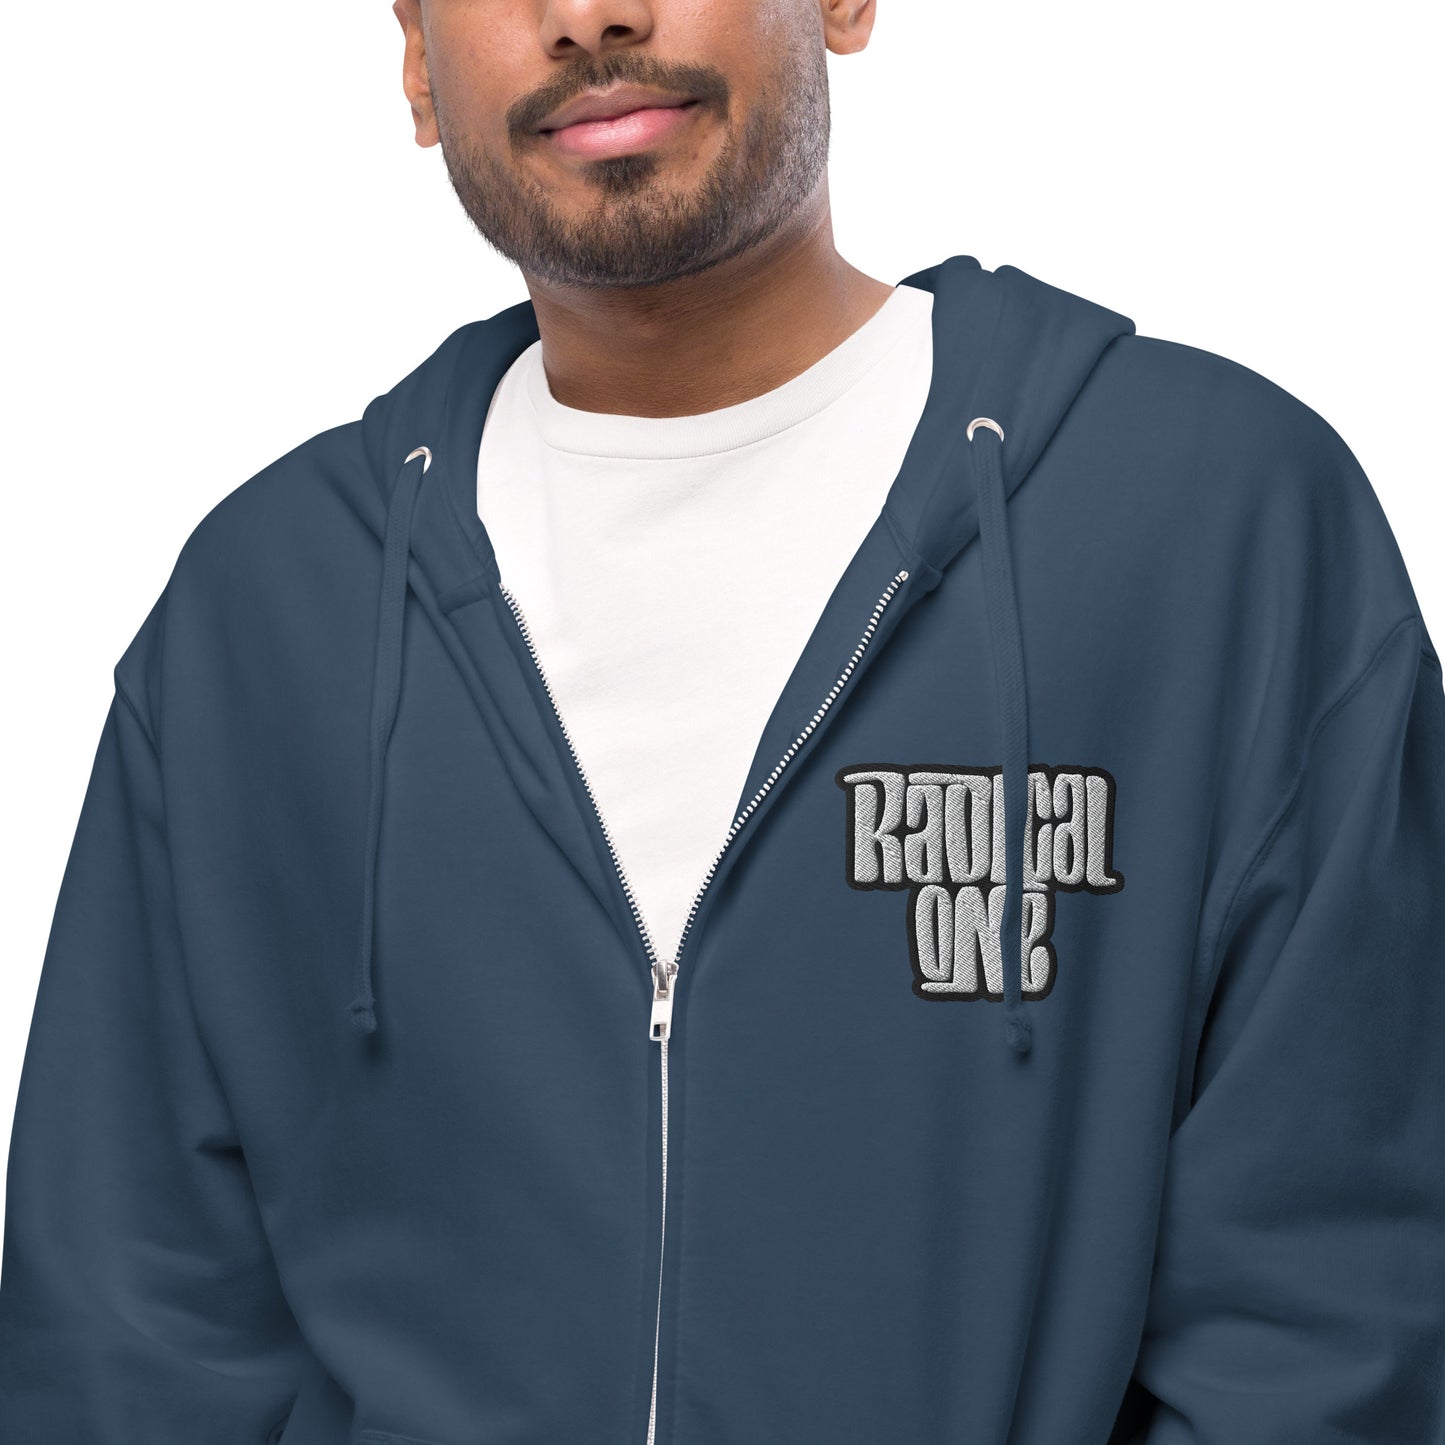 RADICAL ONE - Unisex fleece zip up  hoodie